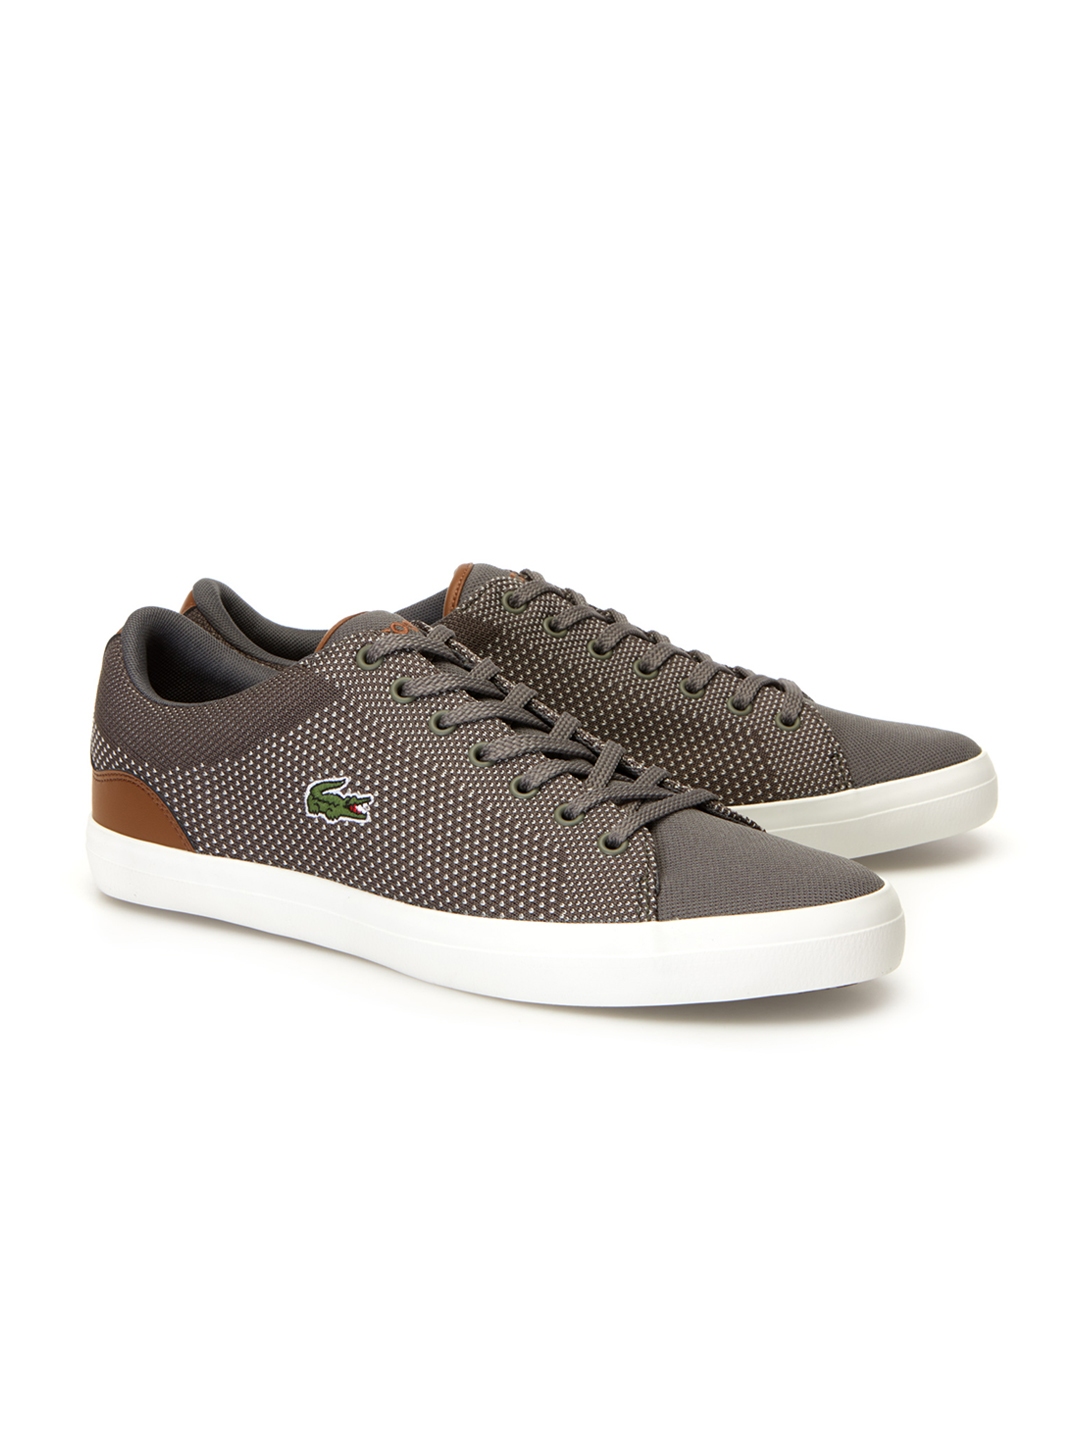 Buy Lacoste Men Grey Sneakers - Casual Shoes for Men 7342589 | Myntra